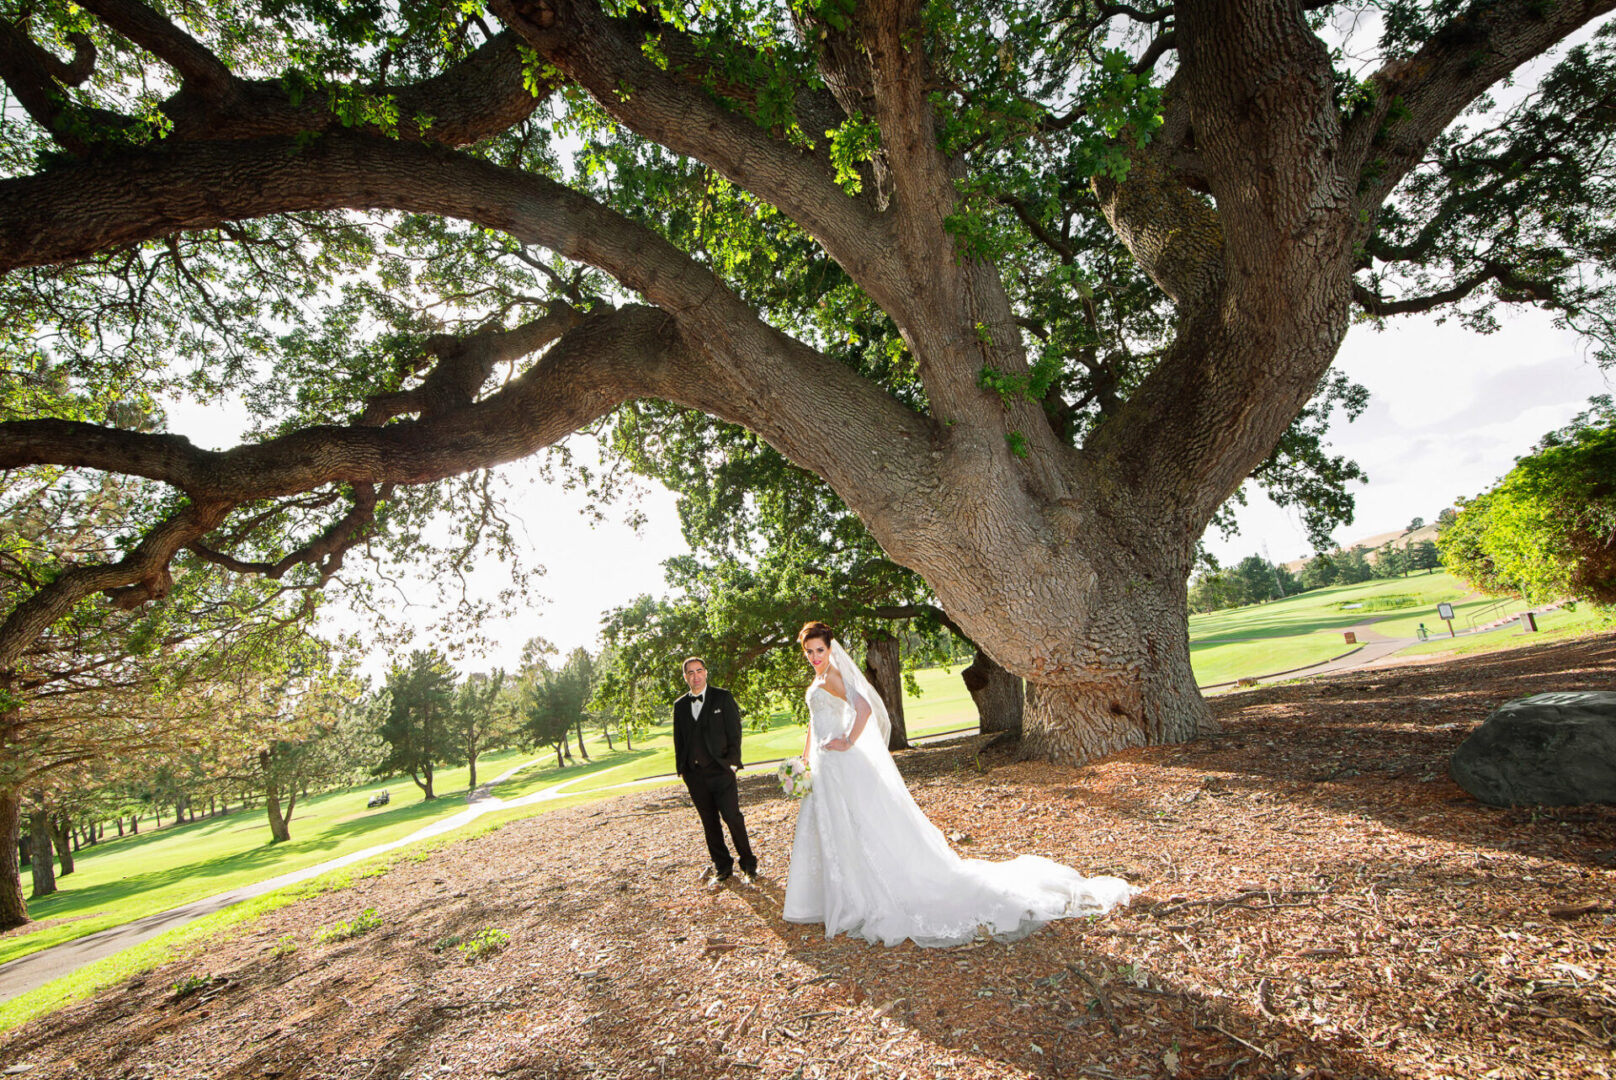 A newly married couple standing near a big tree